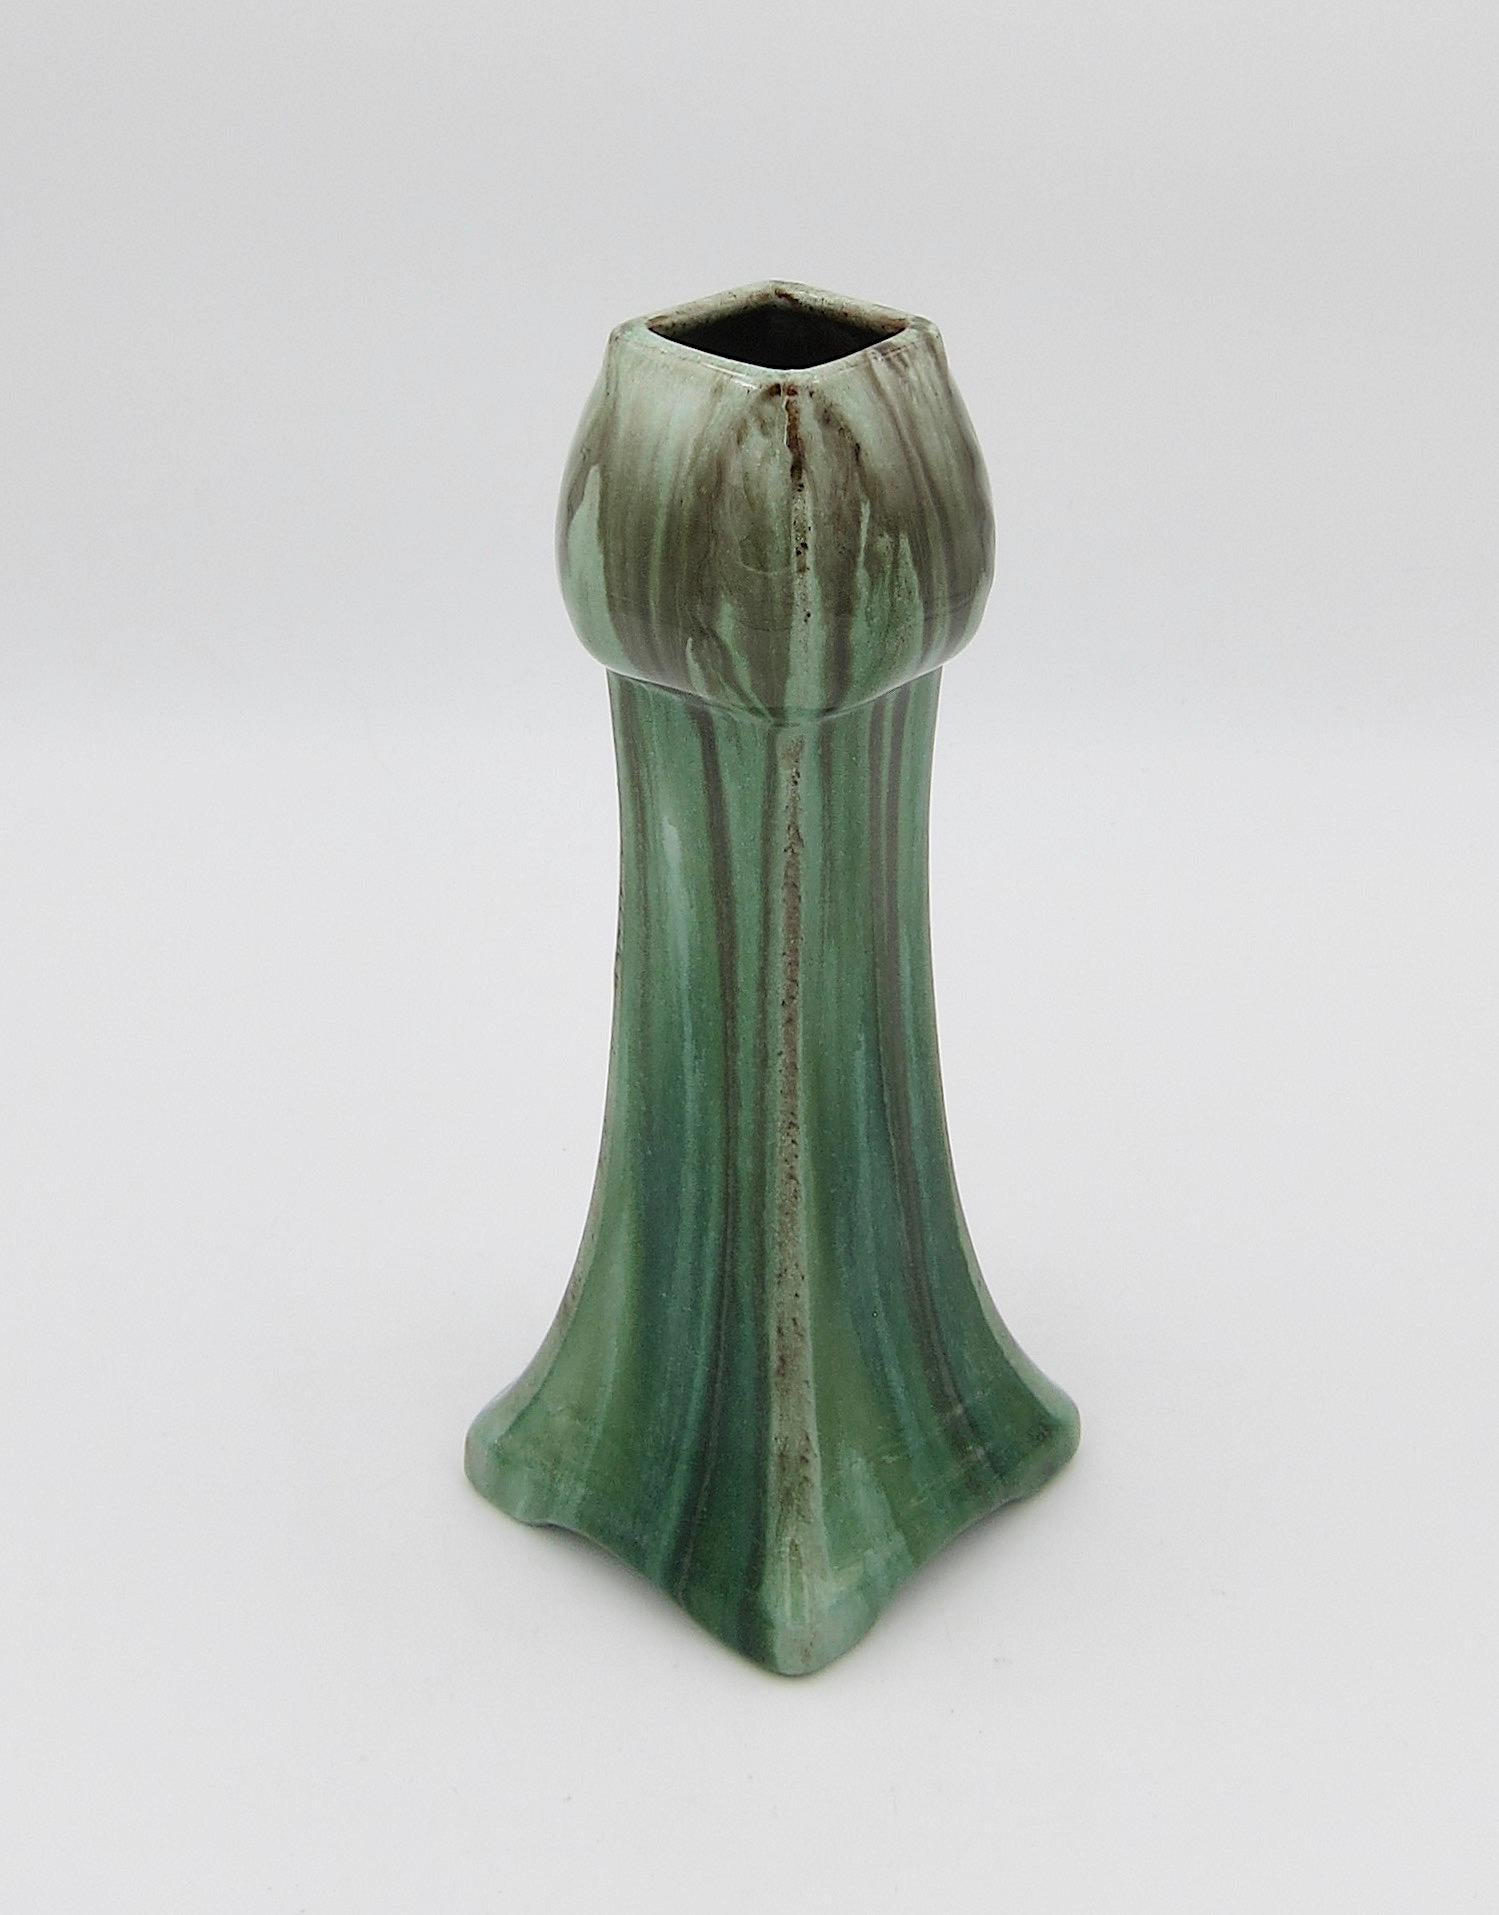 Belgian Art Nouveau Style Drip Glaze Tulip Vase 2